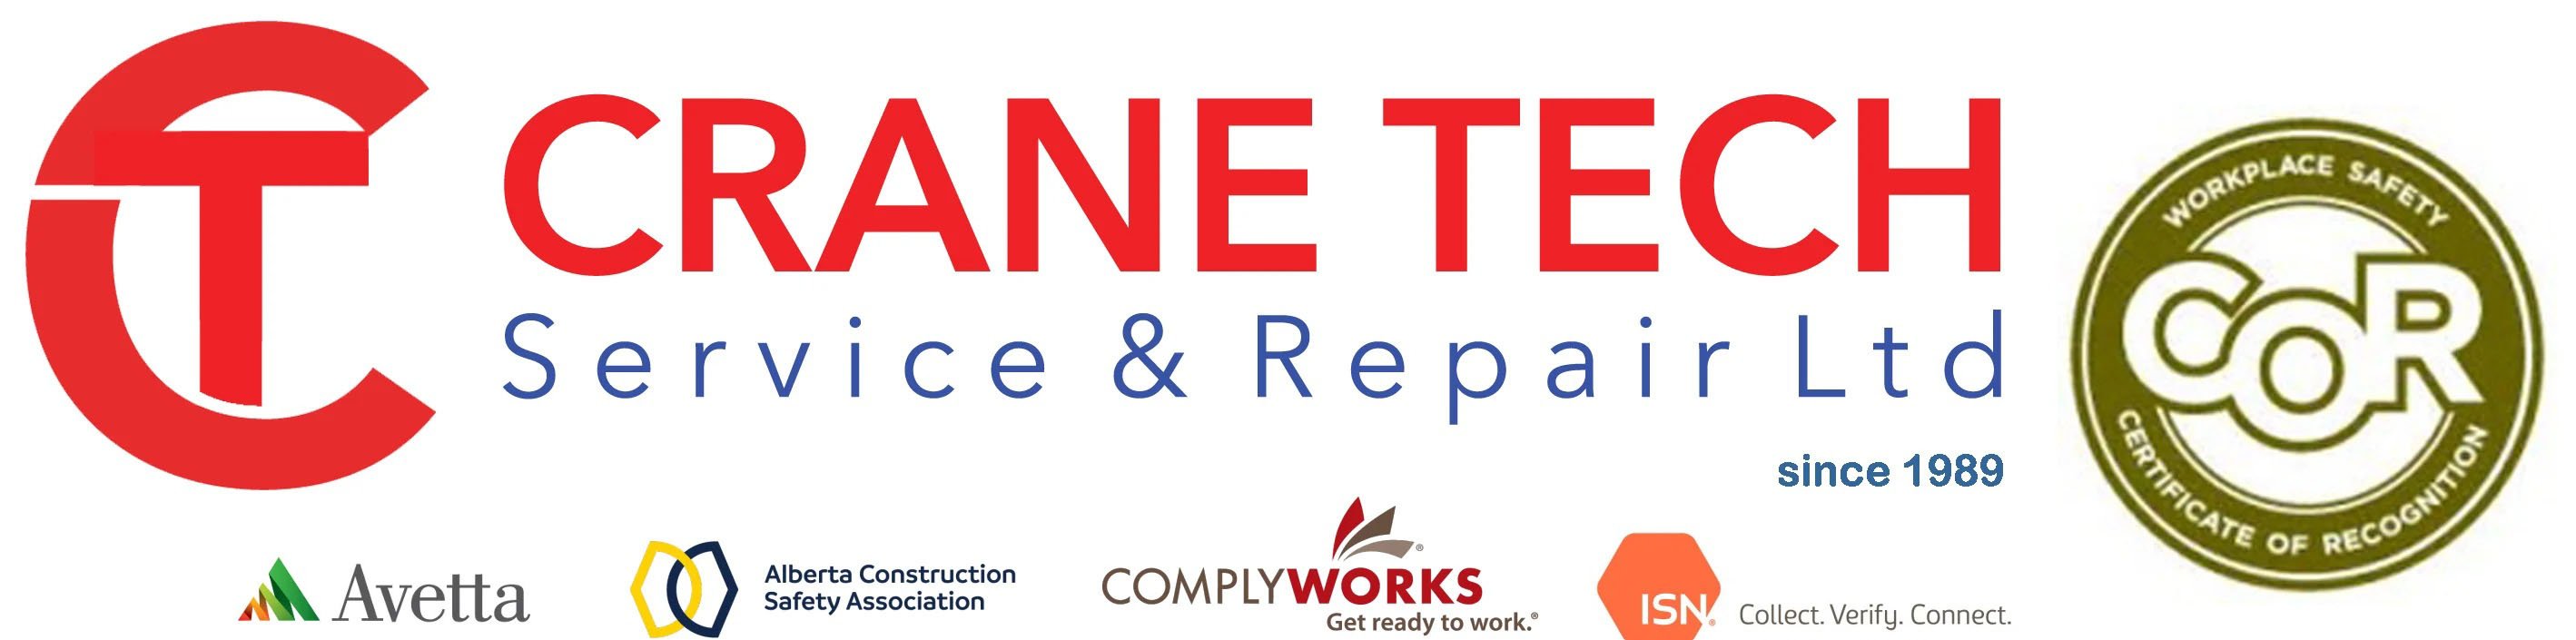 Crane Tech Service & Repair Ltd